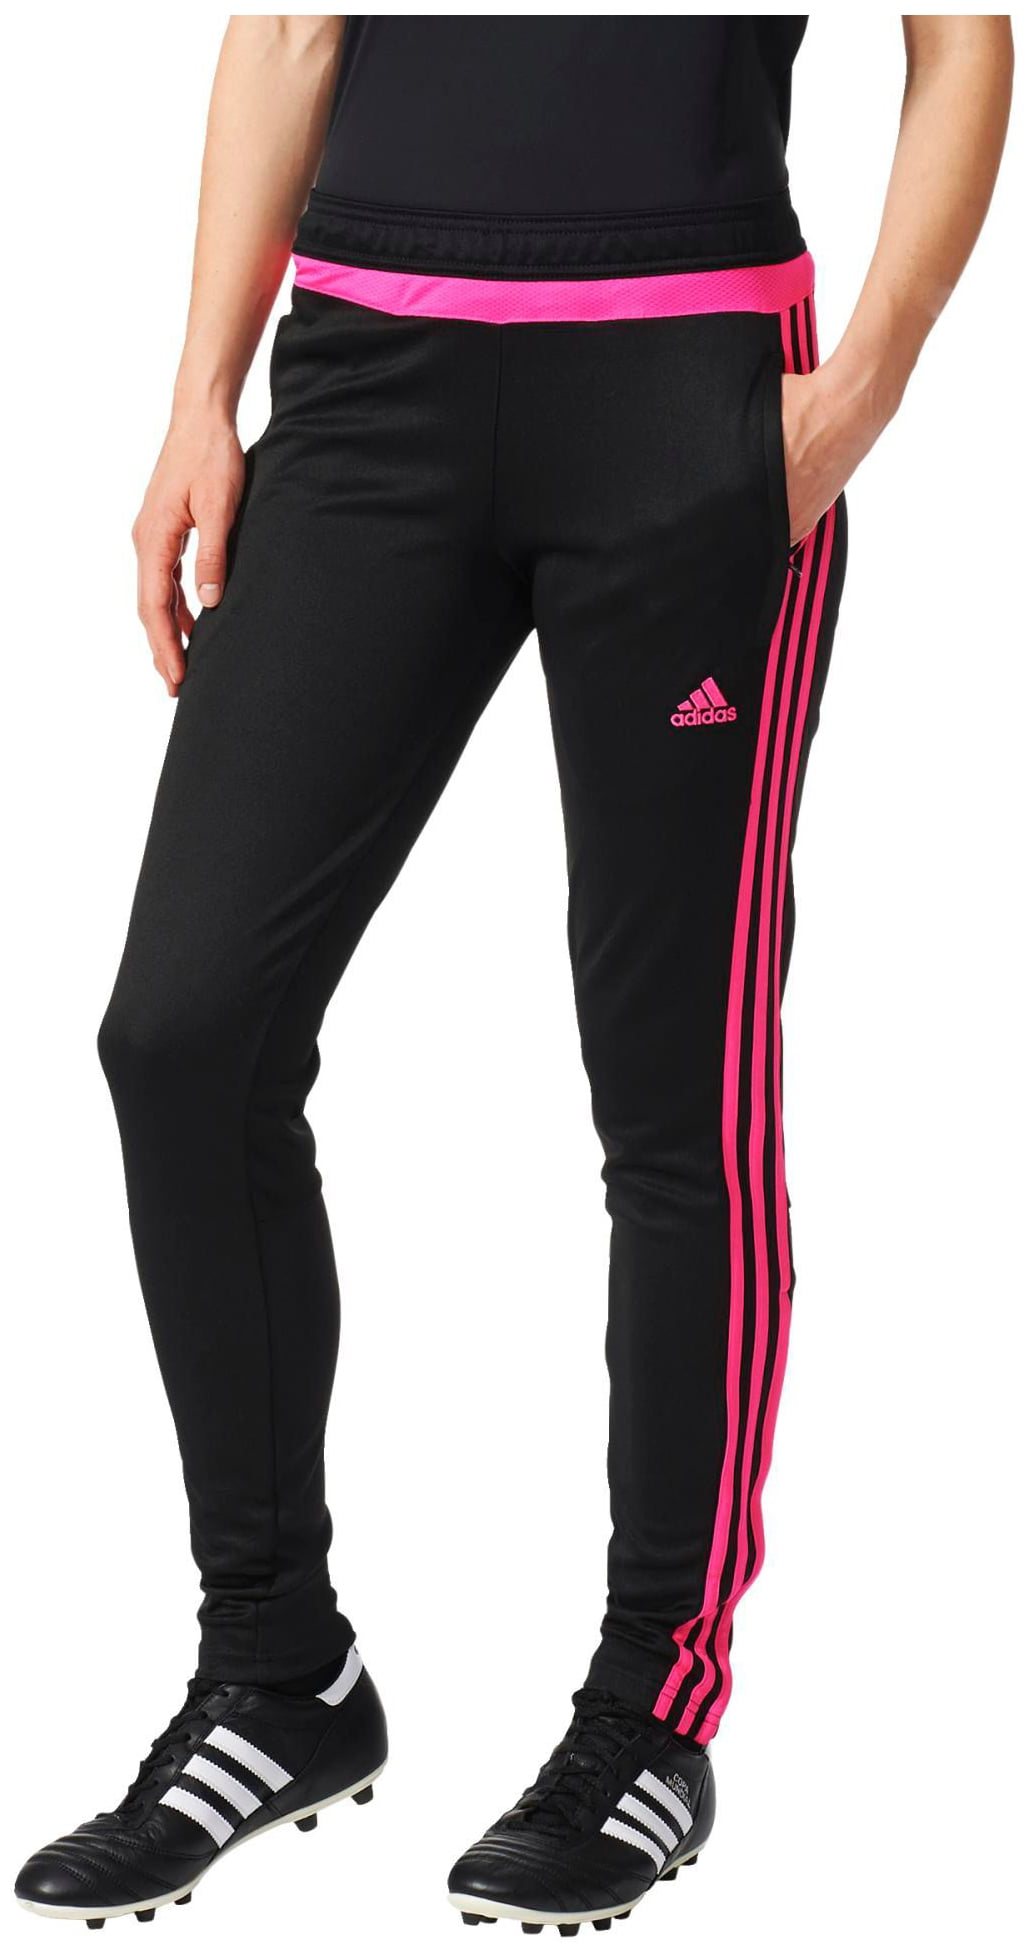 adidas women's tiro 15 training soccer pants